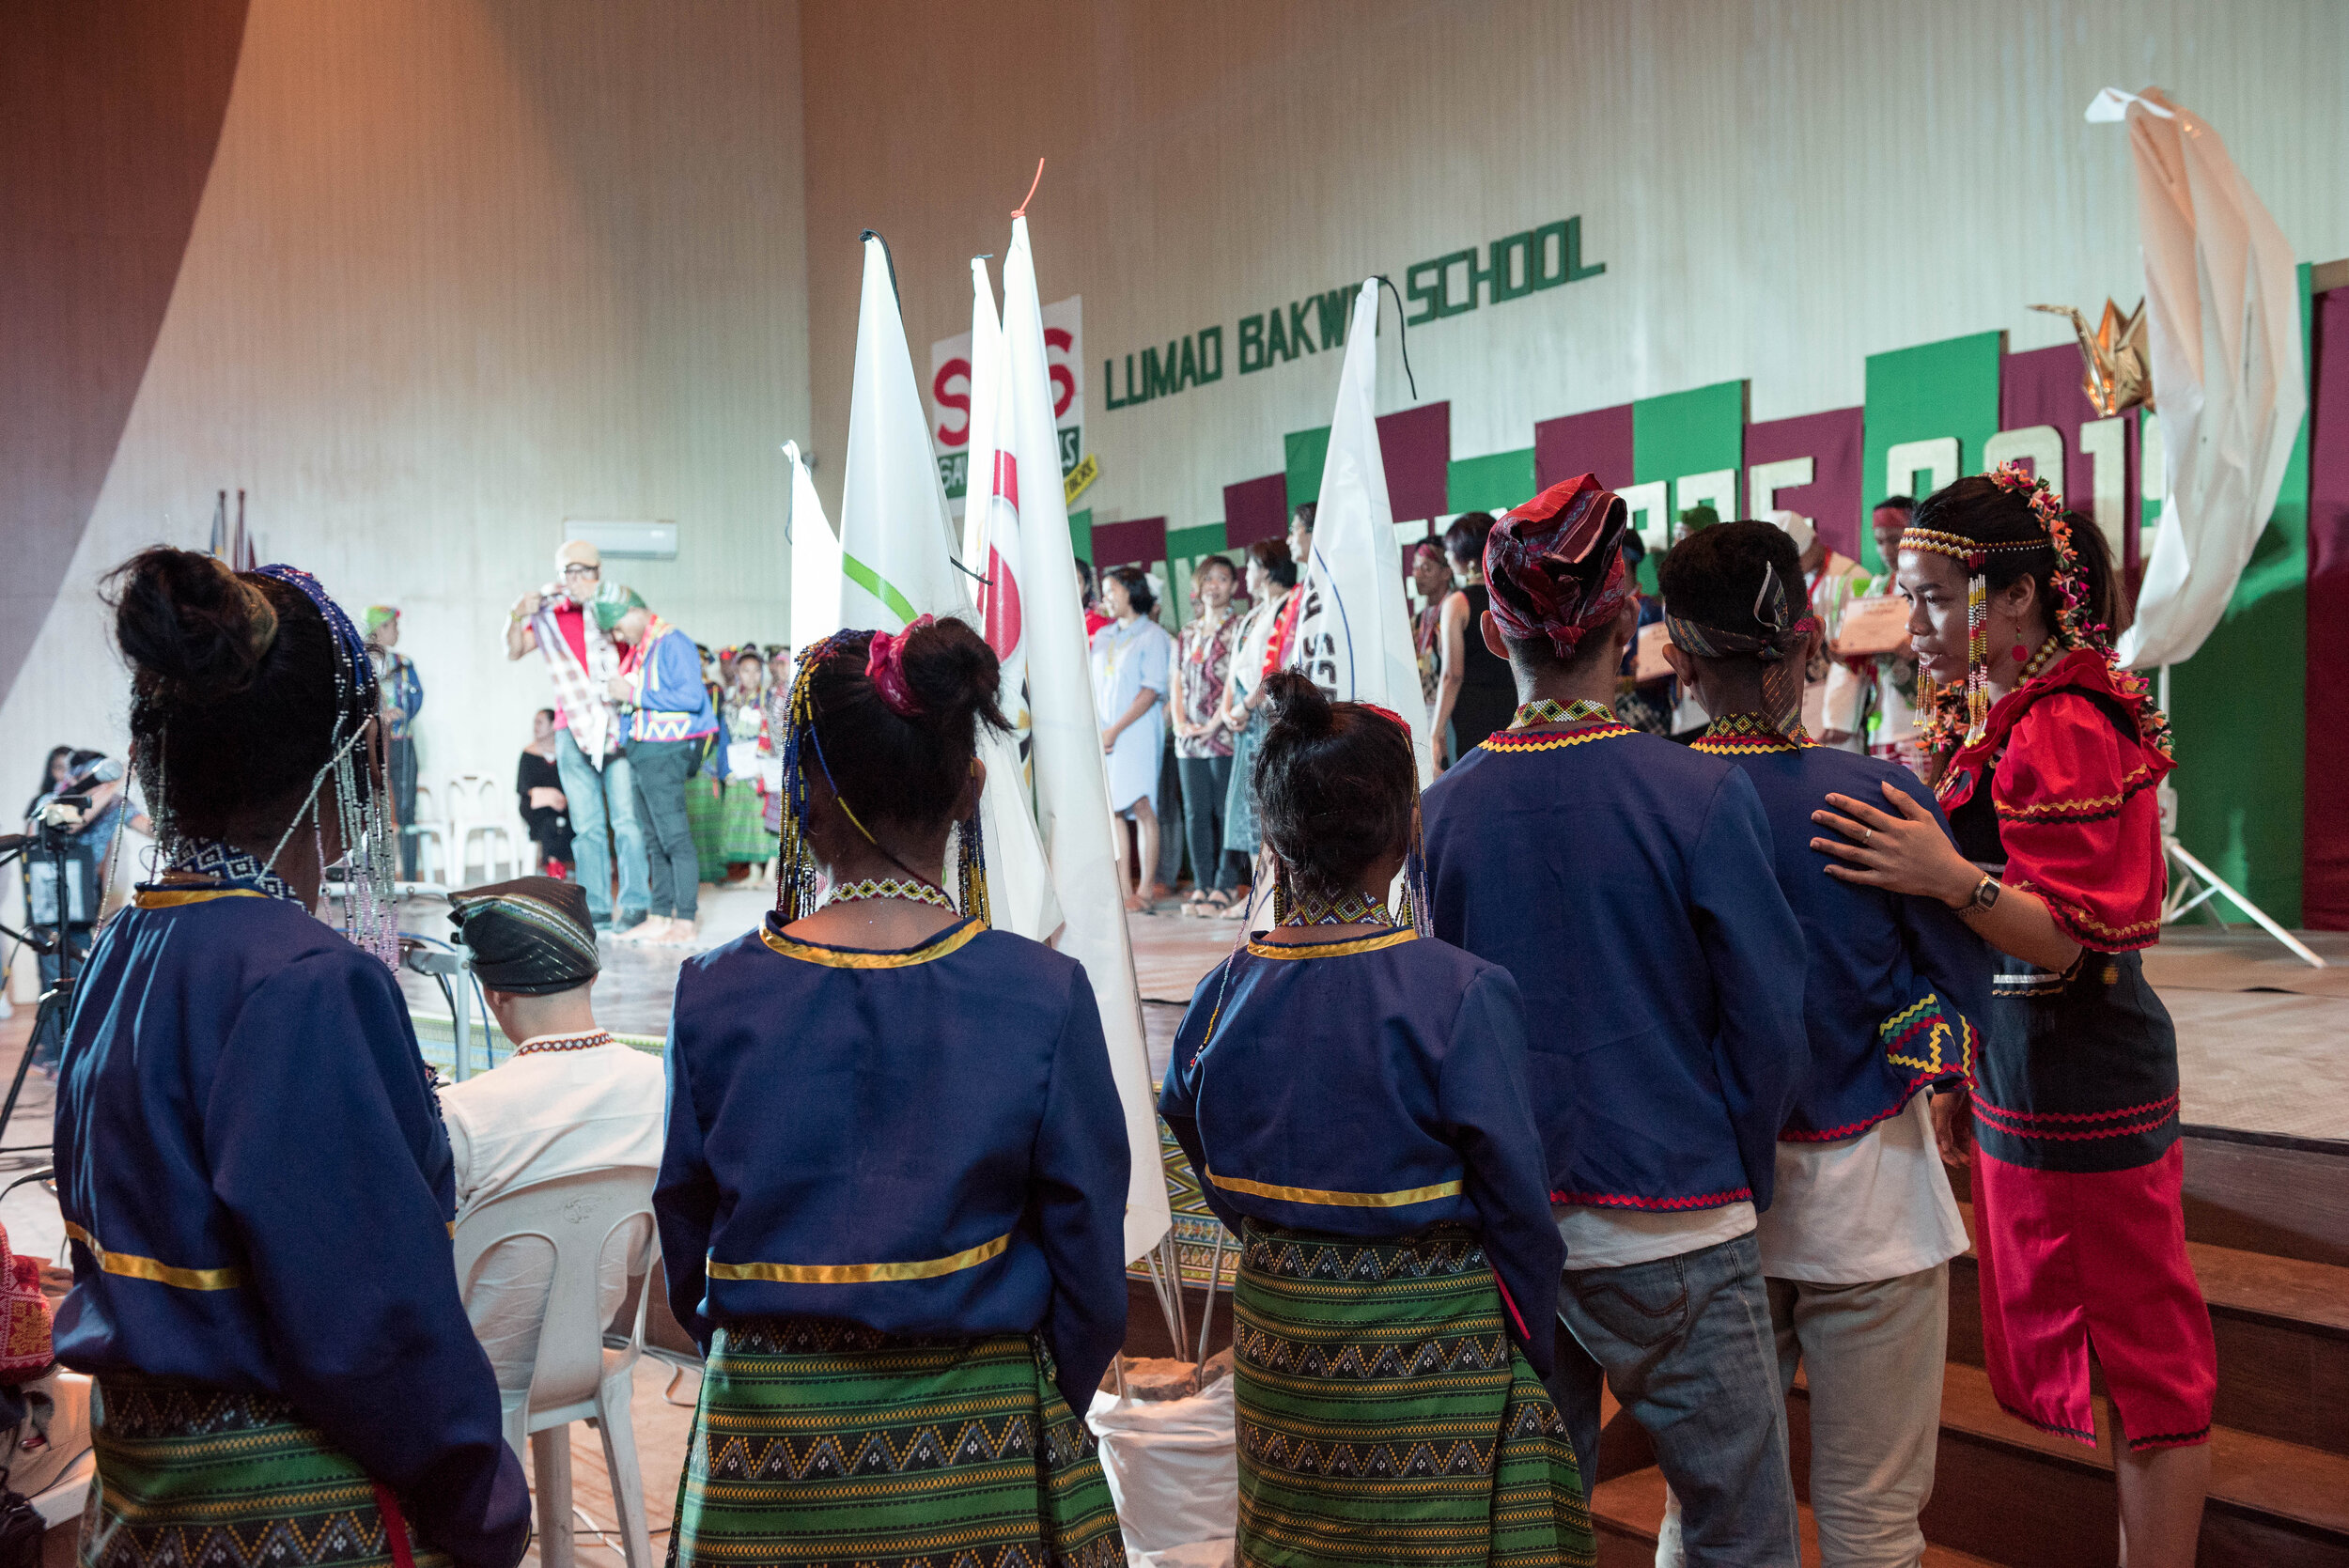 011 - Lumad Bakwit School Moving-up Ceremony by Pau Villanueva.jpg